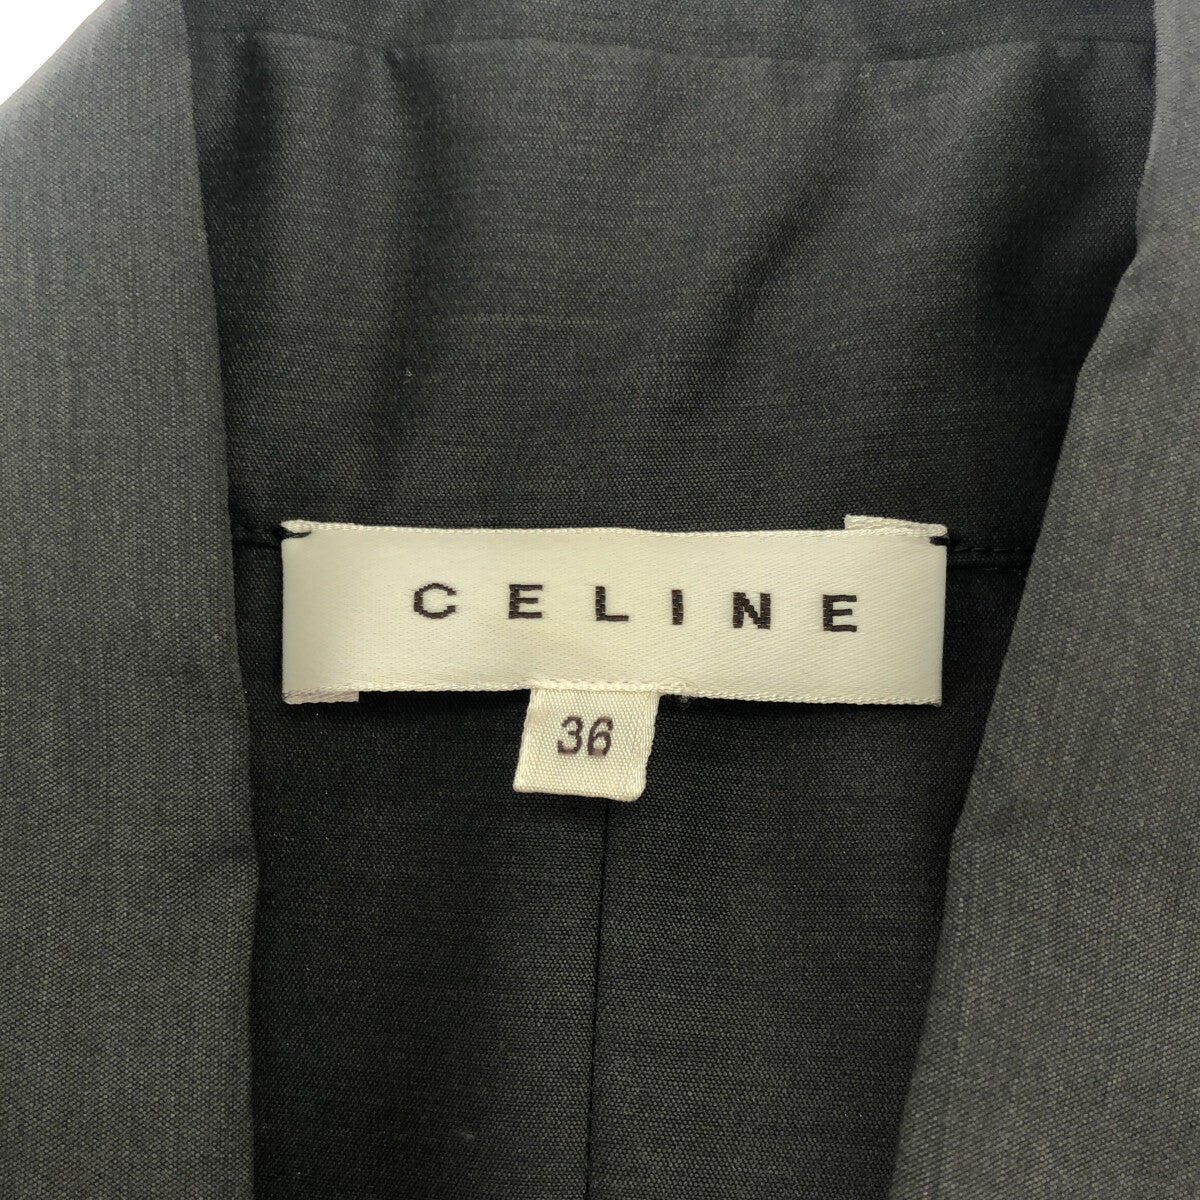 CELINE / セリーヌ | デザイン シャツワンピース | 36 |